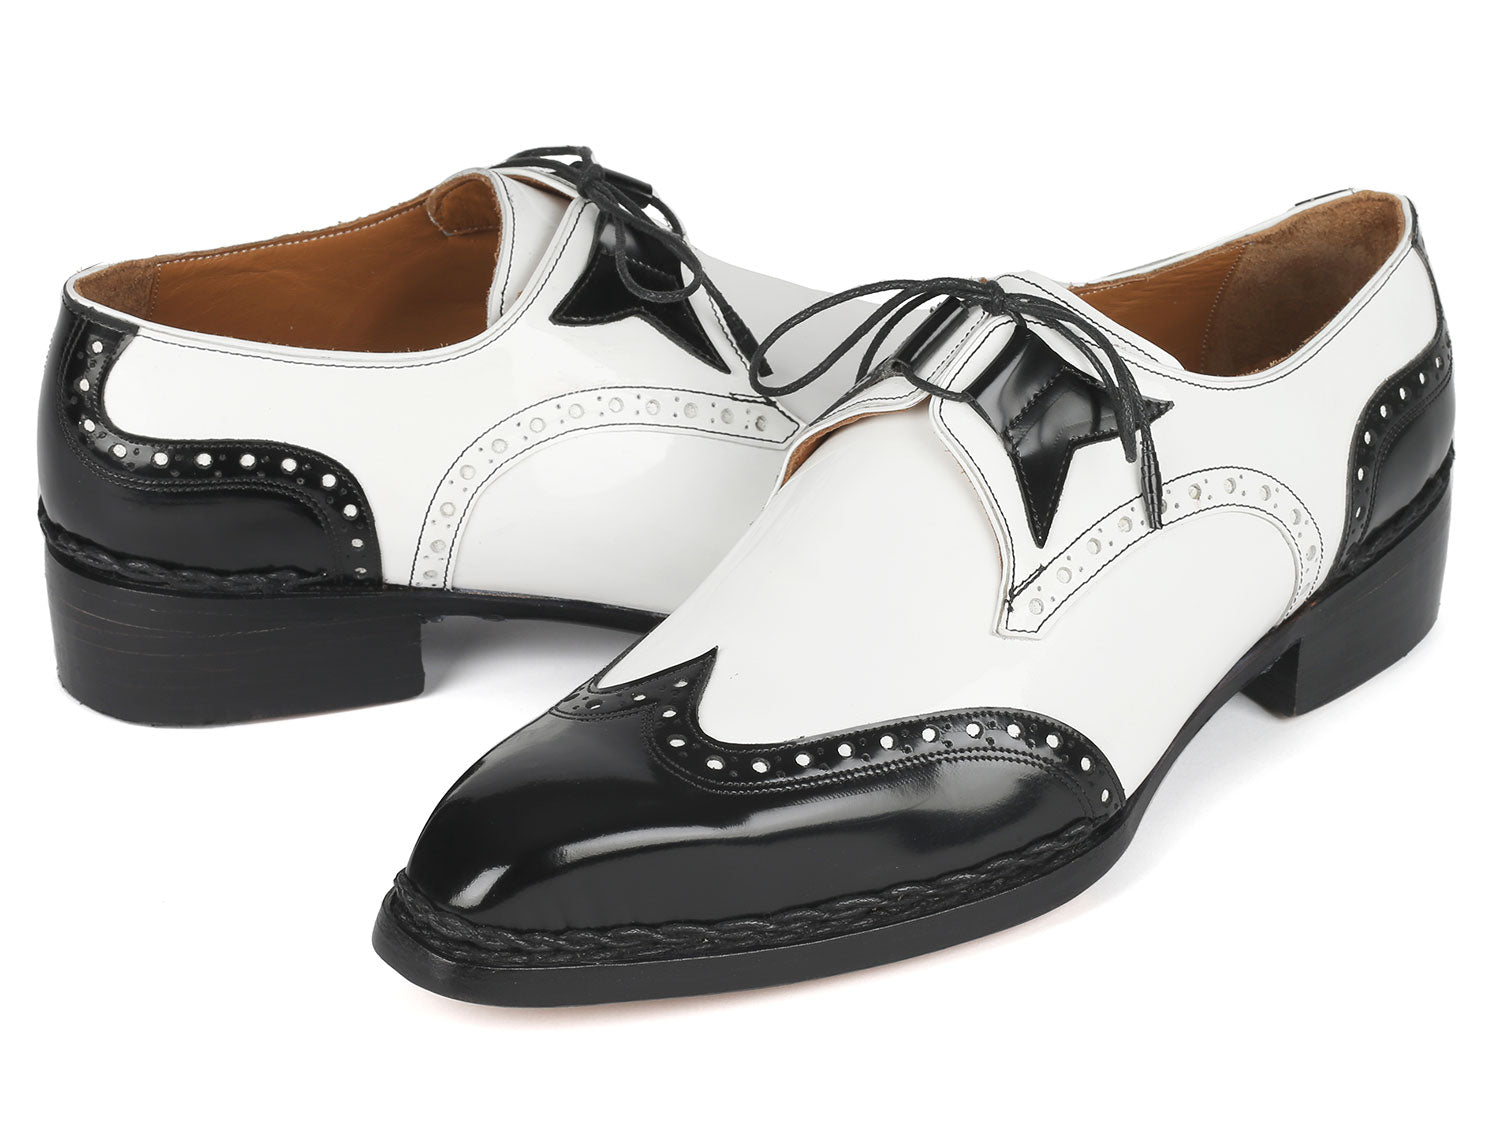 Paul Parkman Norwegian Welted Wingtip Dress Shoes Black & White - 8505-BNW